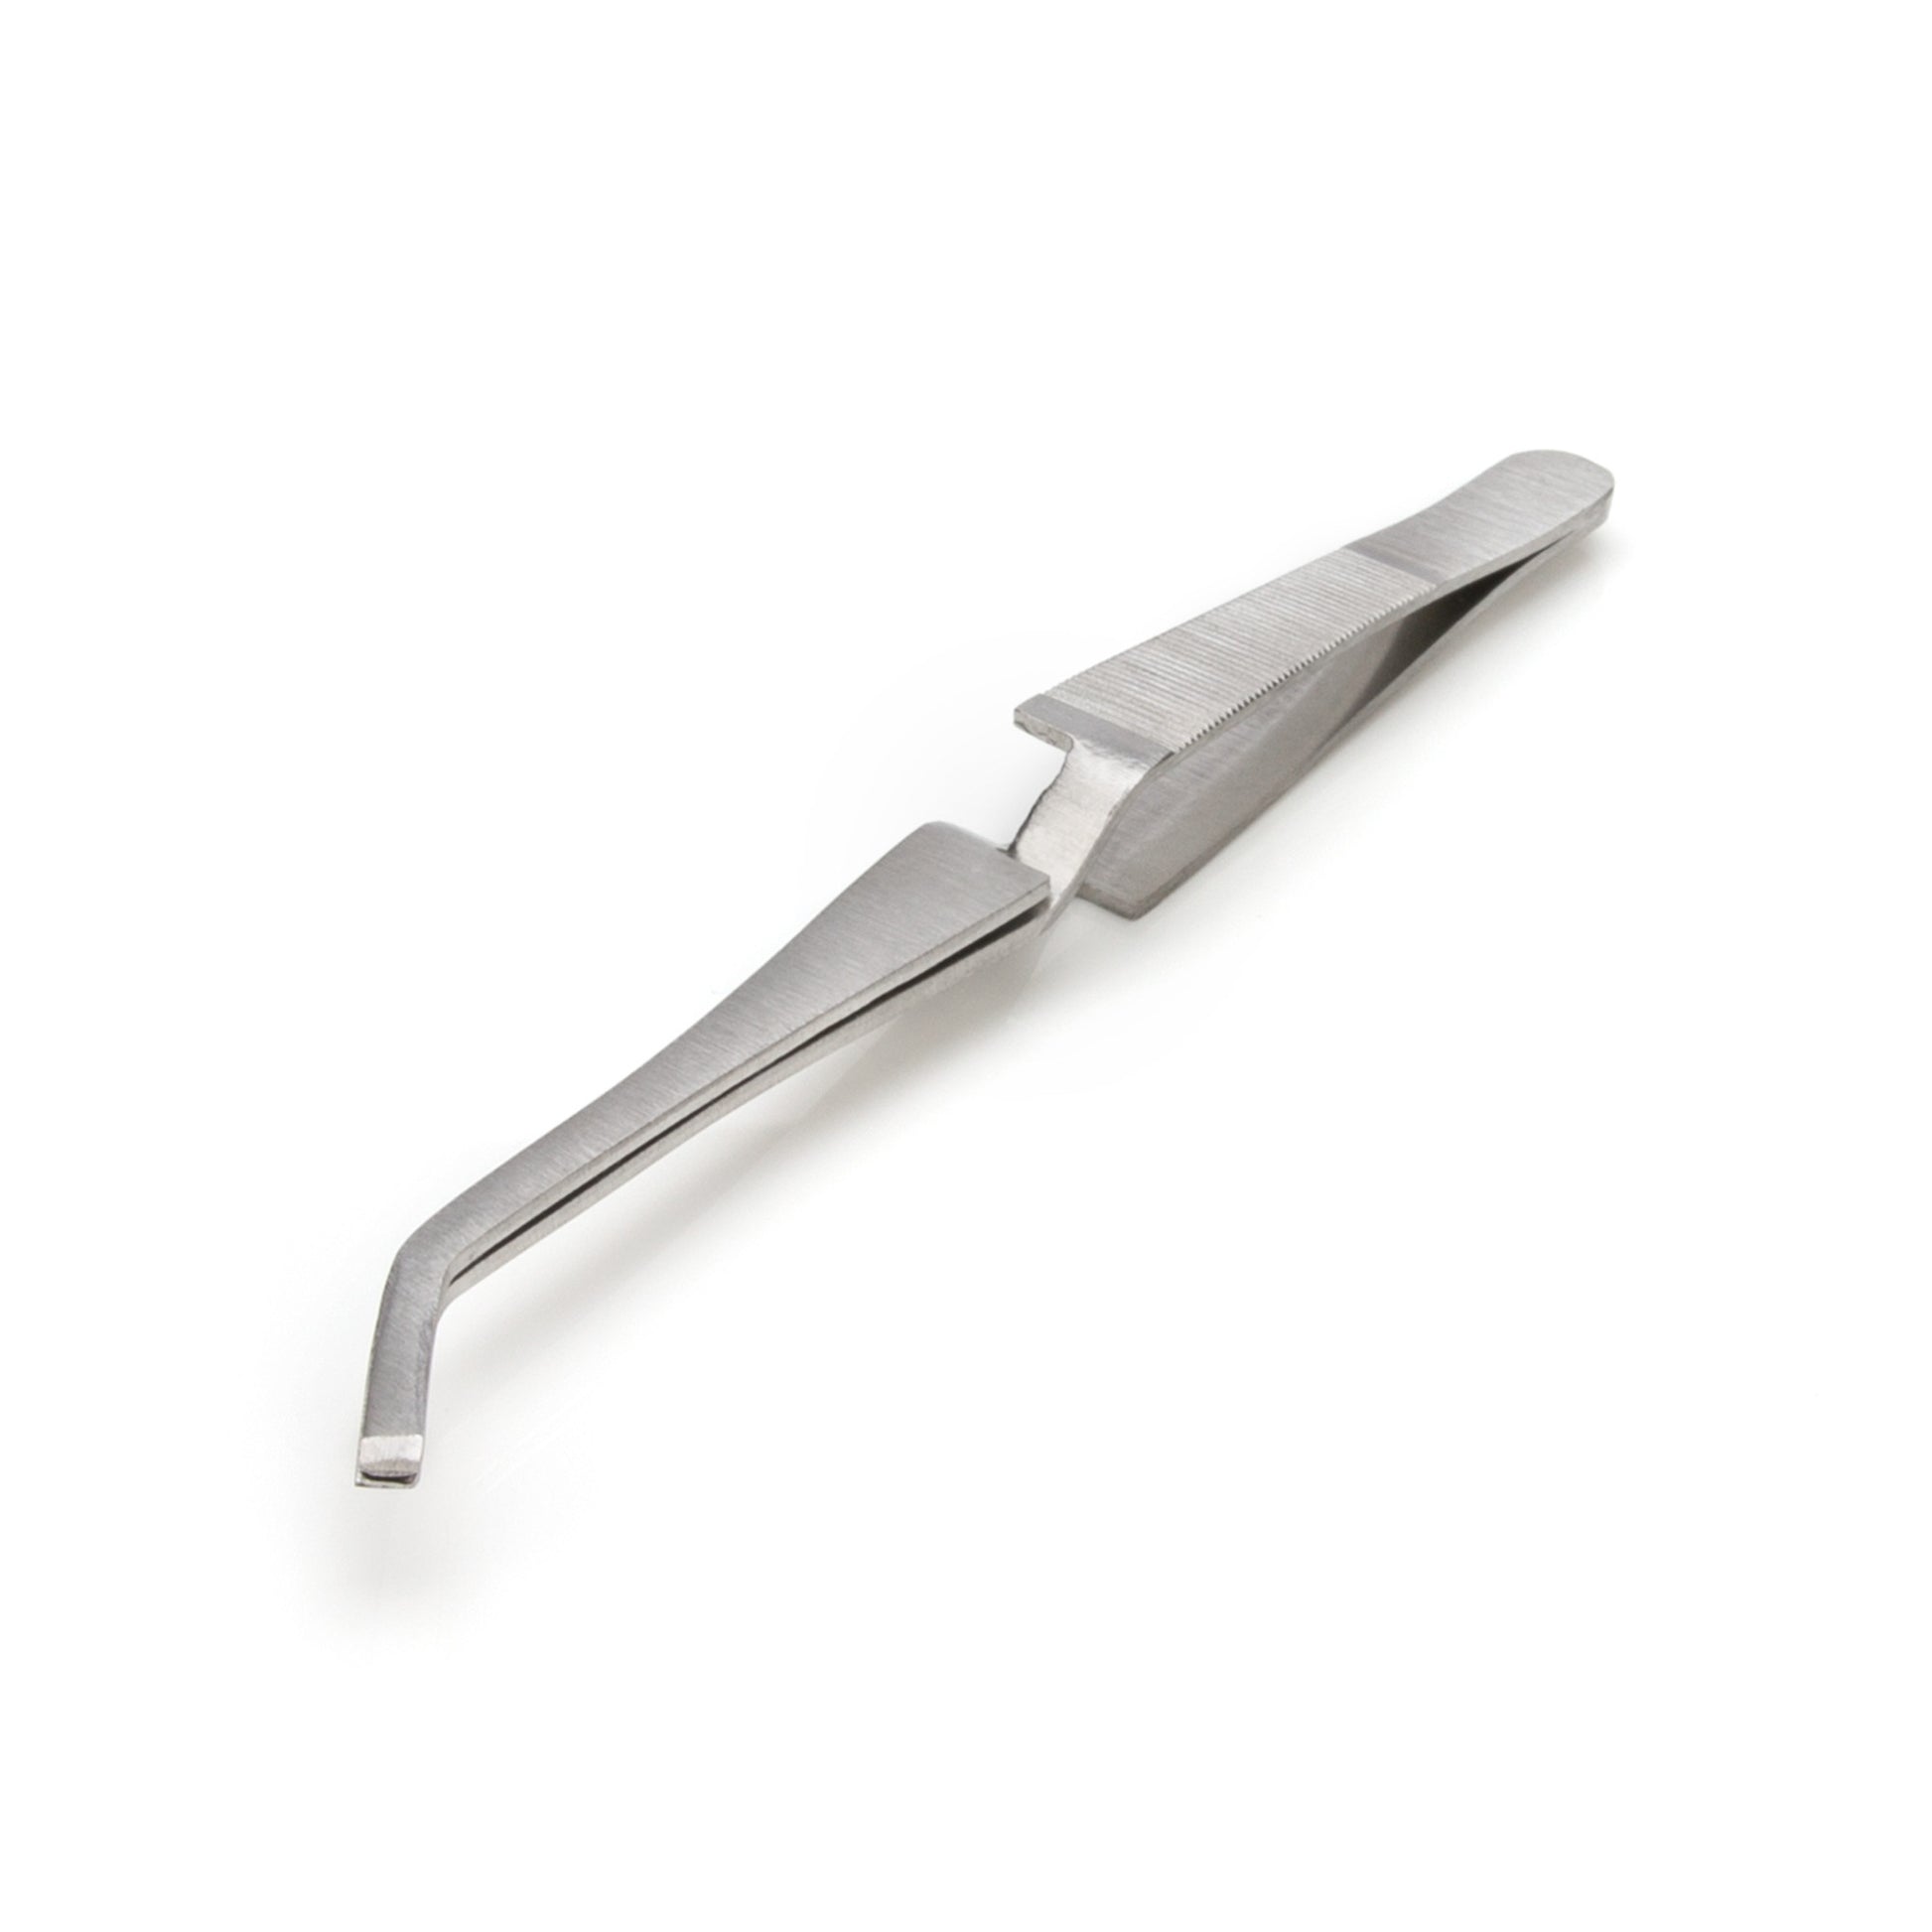 Steelman 05604 6-Inch Slide-Locking Straight Rounded Tip Tweezers